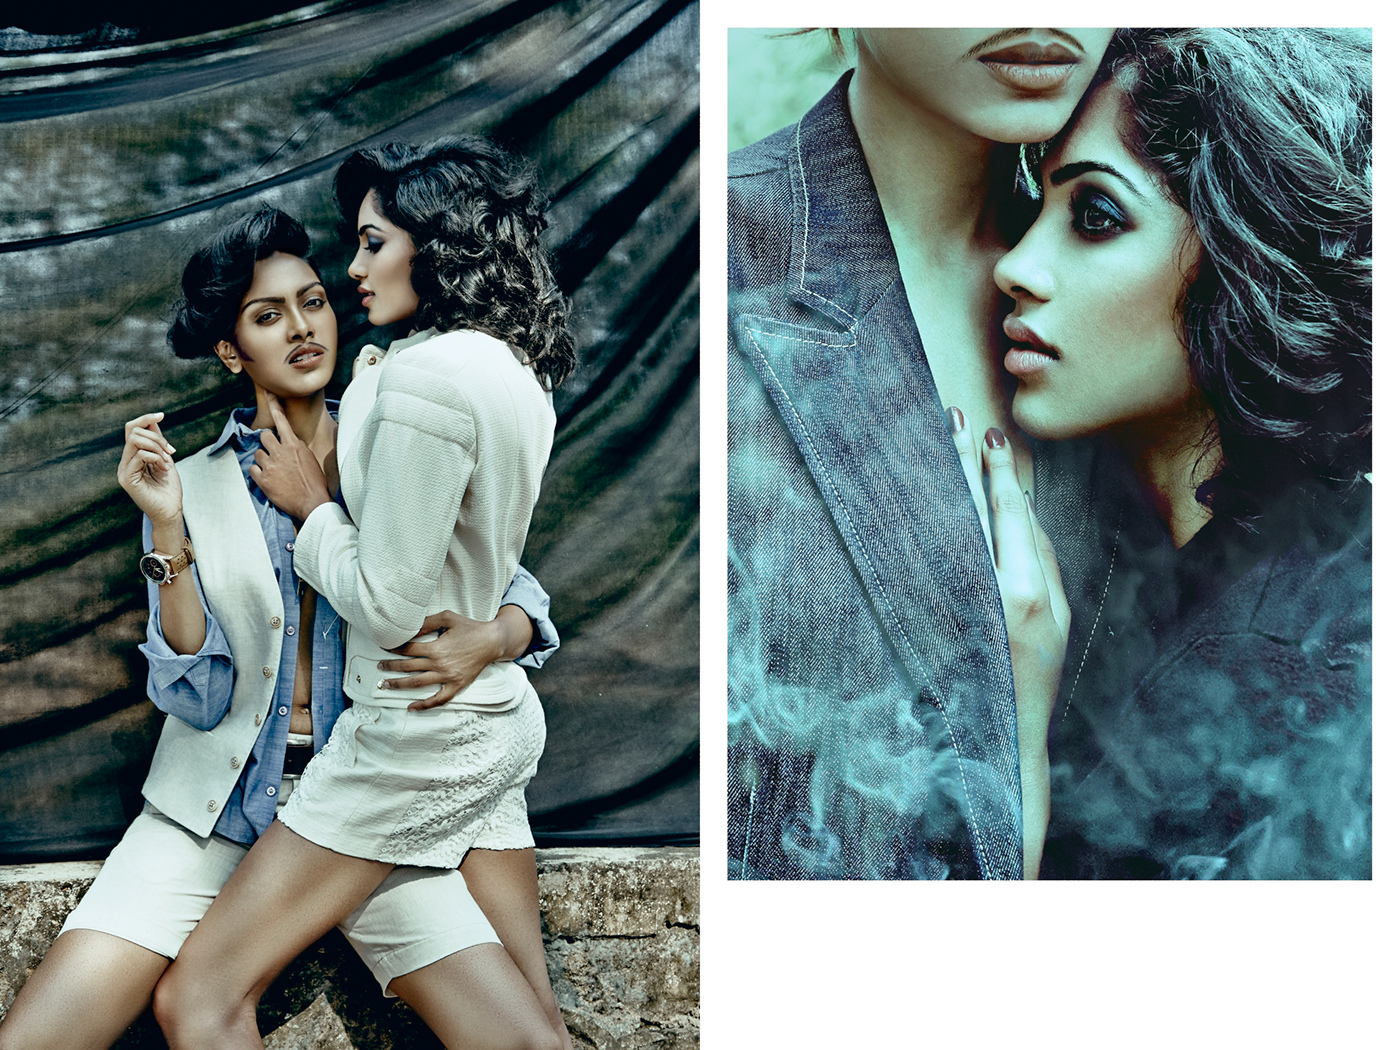 androgynous couple Love Nature sushant panchal sushant panchal art images photos models